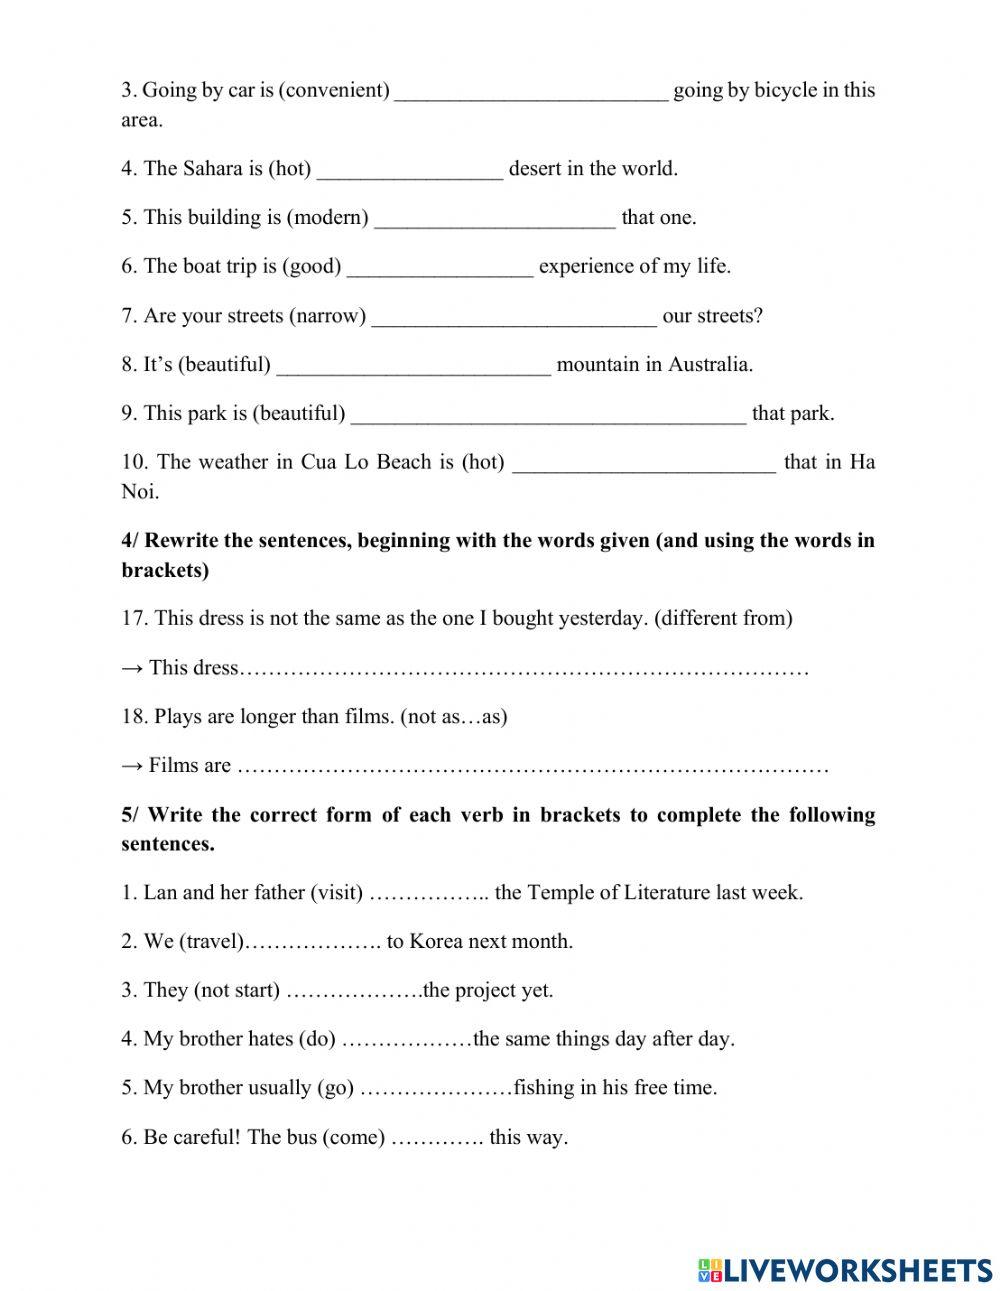 Tiếng Anh 7 - HK1 - Rewriting the sentences